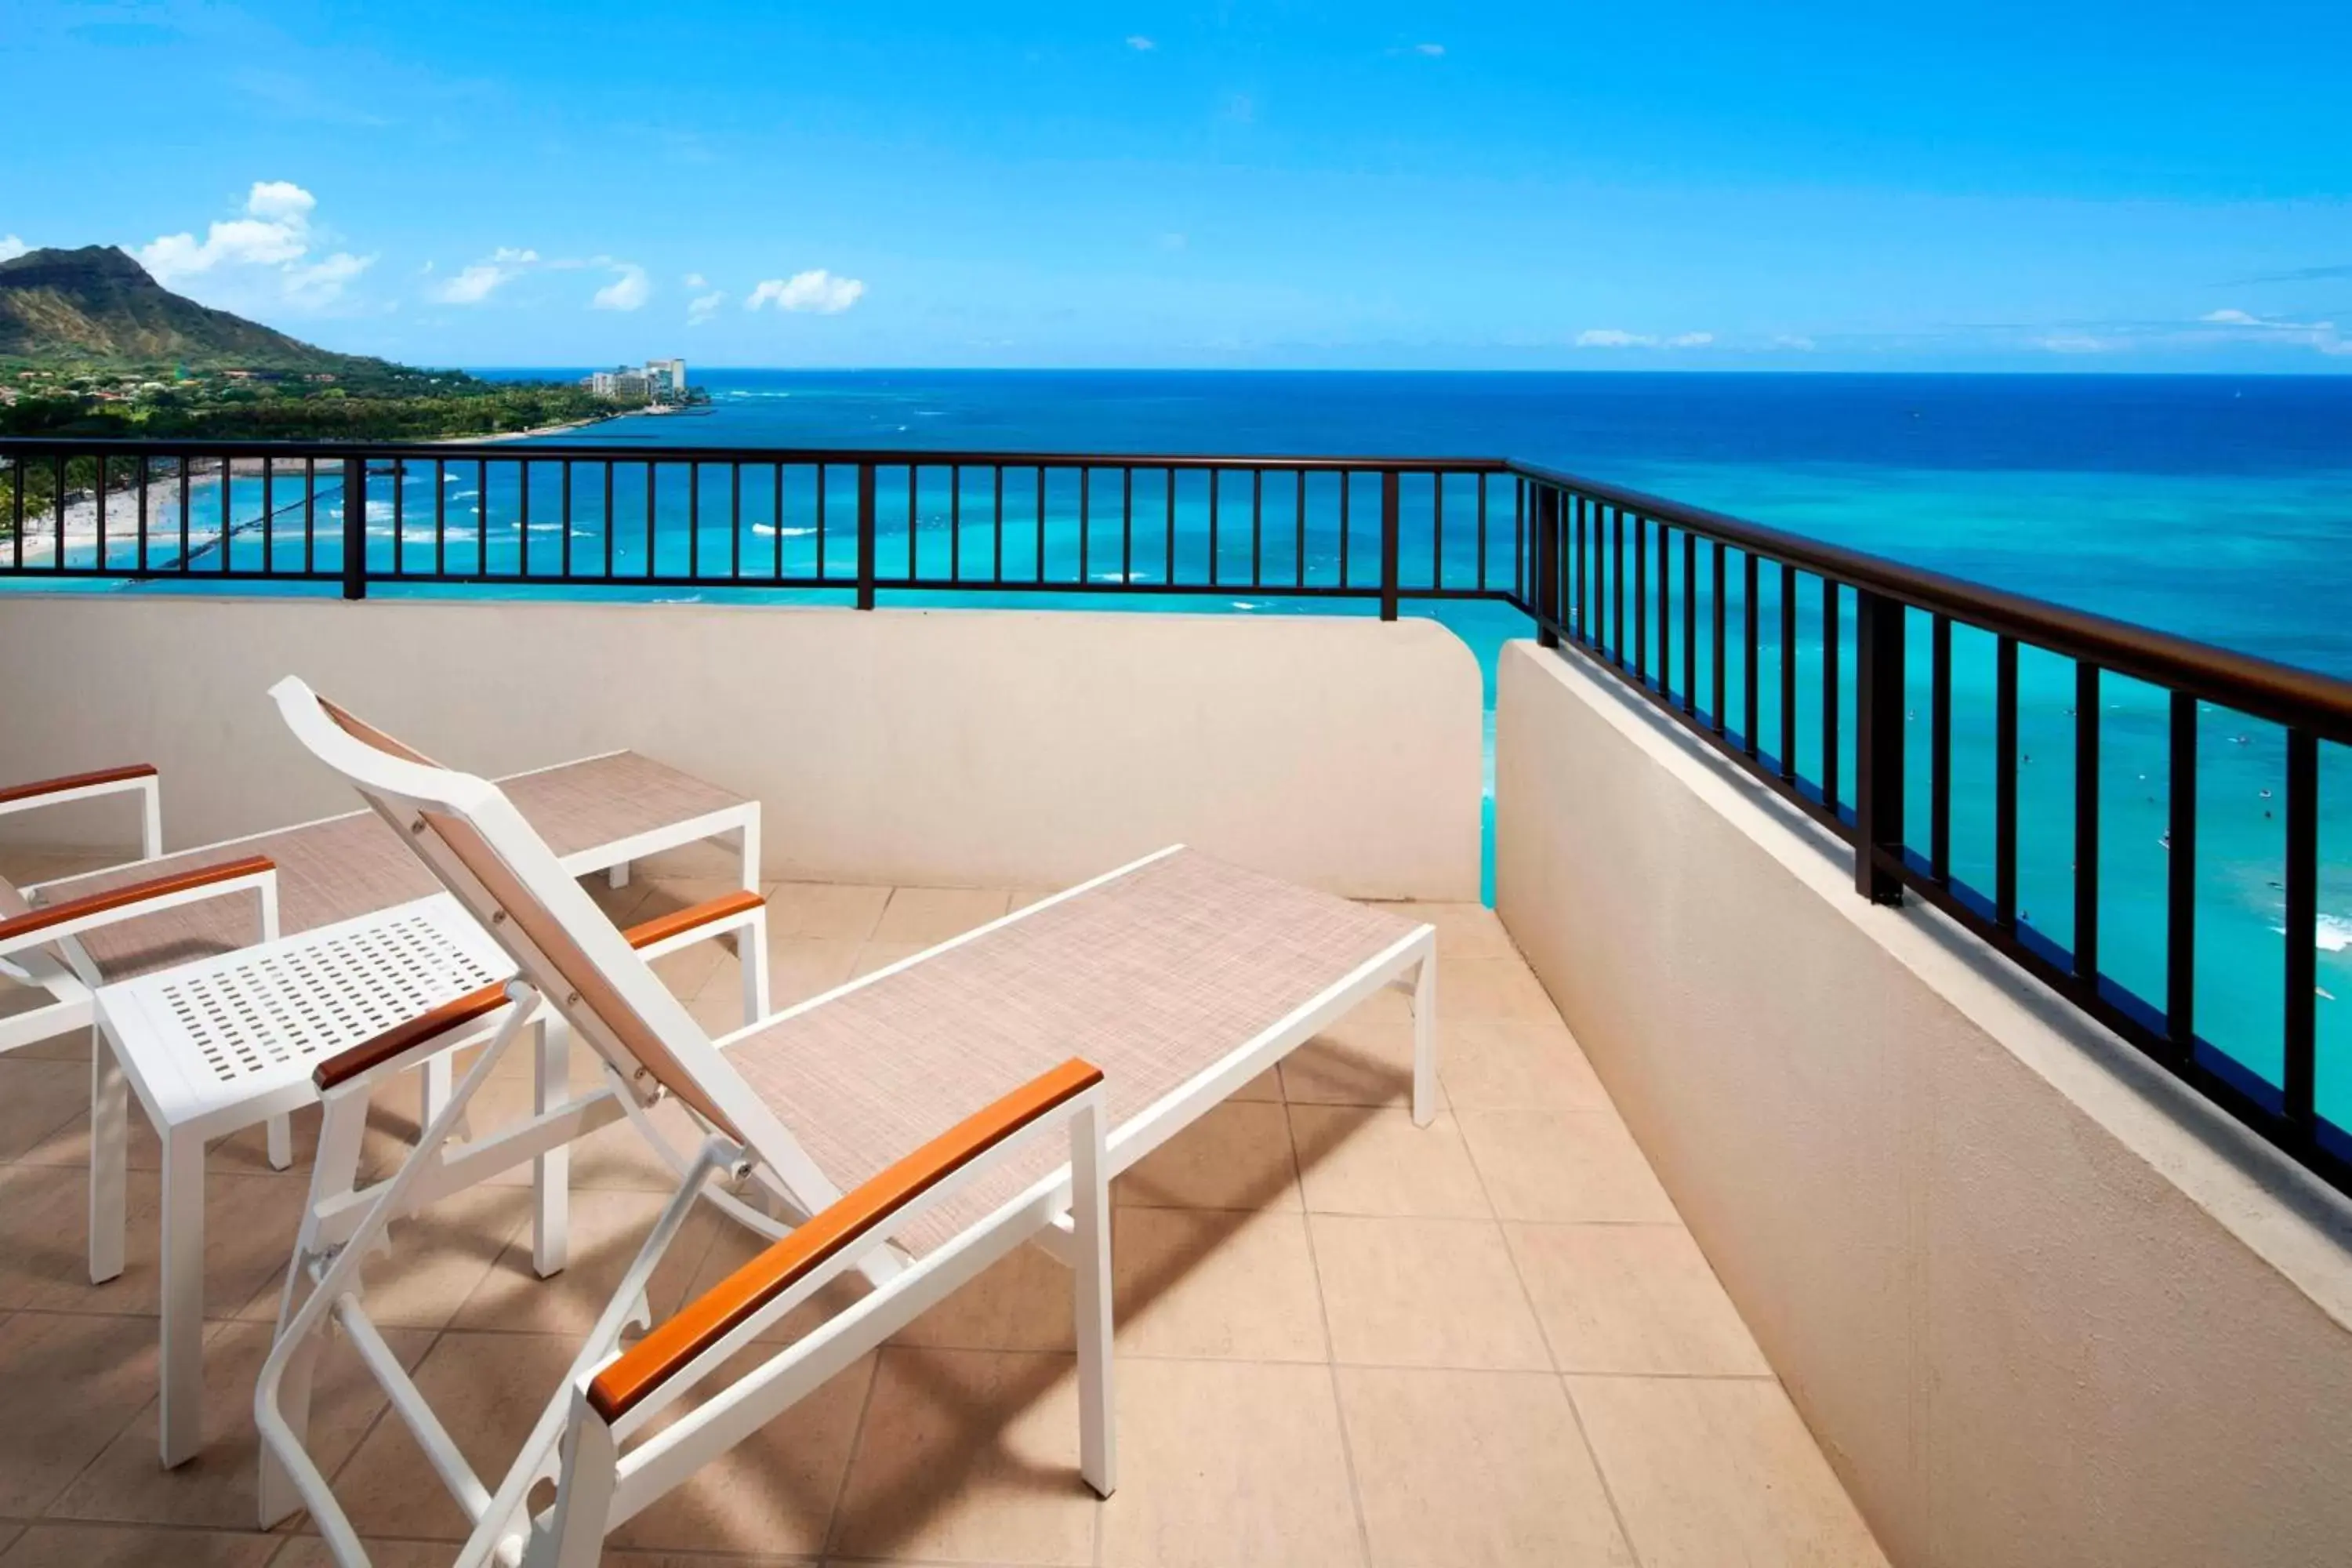 Photo of the whole room, Balcony/Terrace in Moana Surfrider, A Westin Resort & Spa, Waikiki Beach